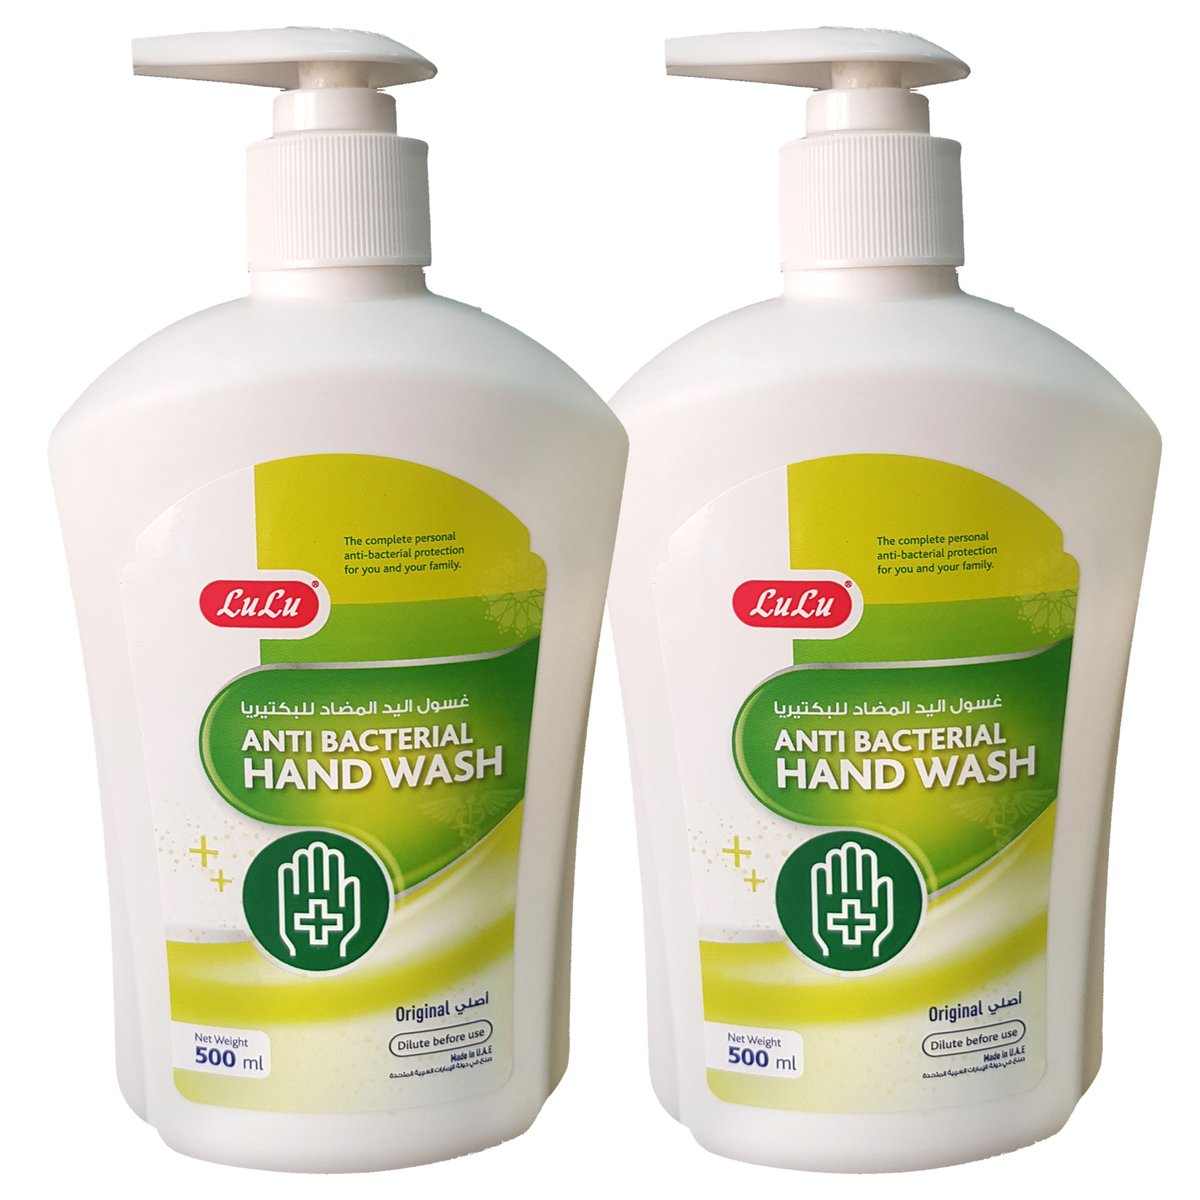 LuLu Anti Bacterial Handwash Assorted 2 x 500 ml